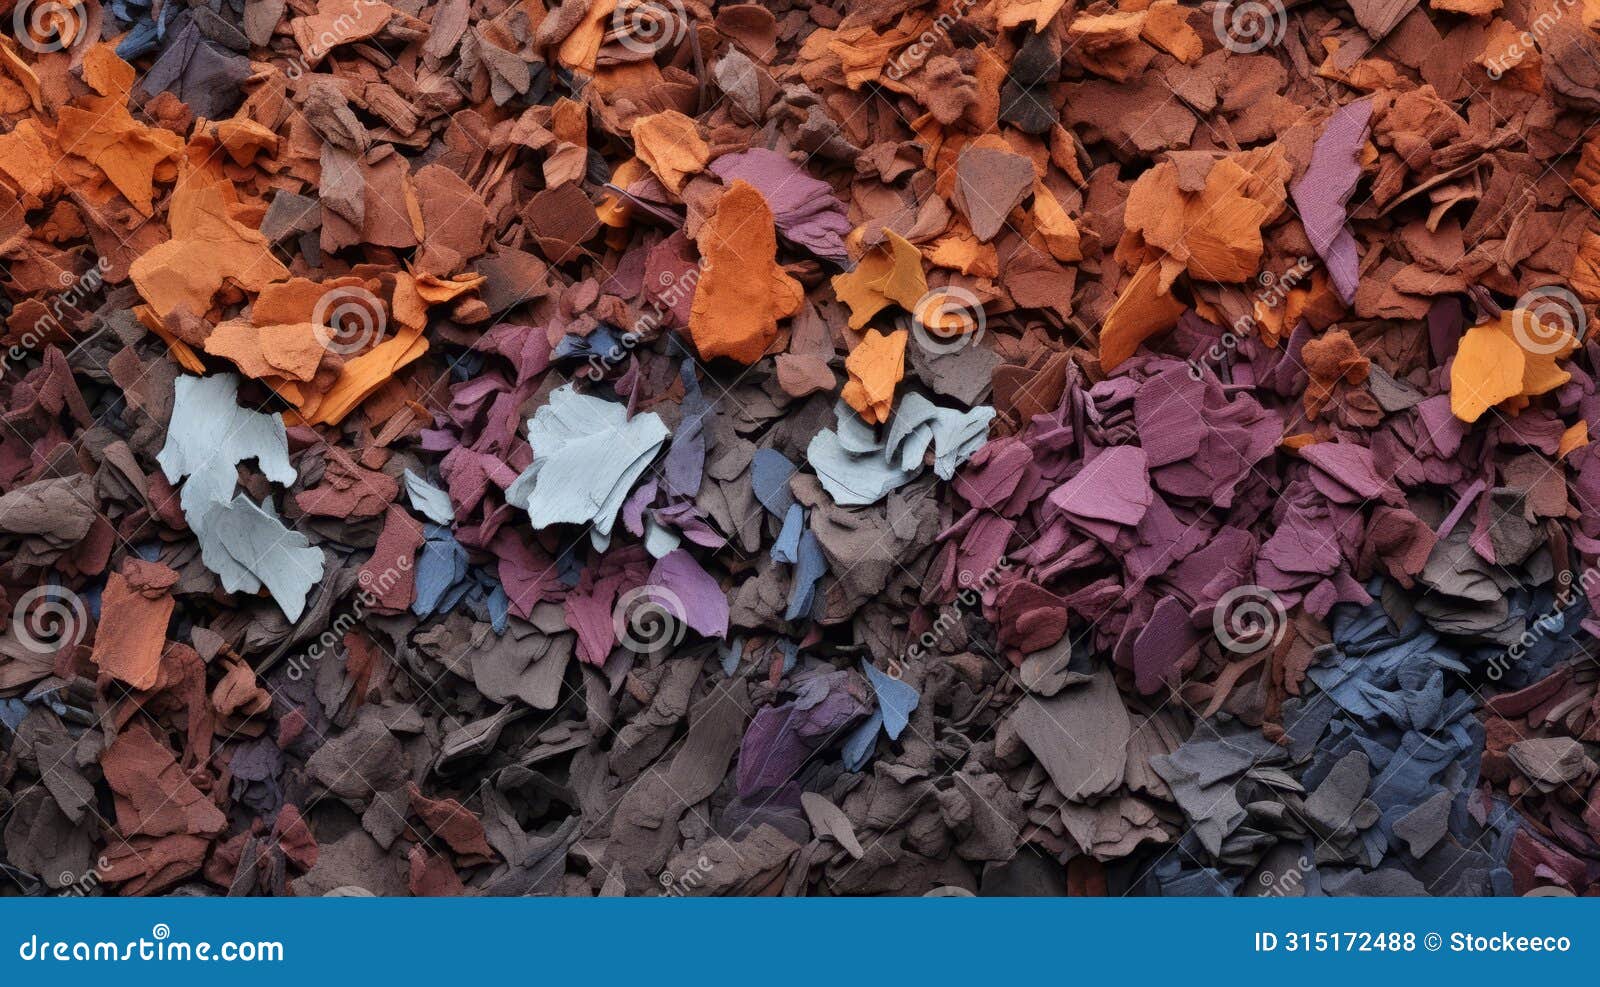 vibrant polychrome terracotta paper scraps: a textured fusion of colors